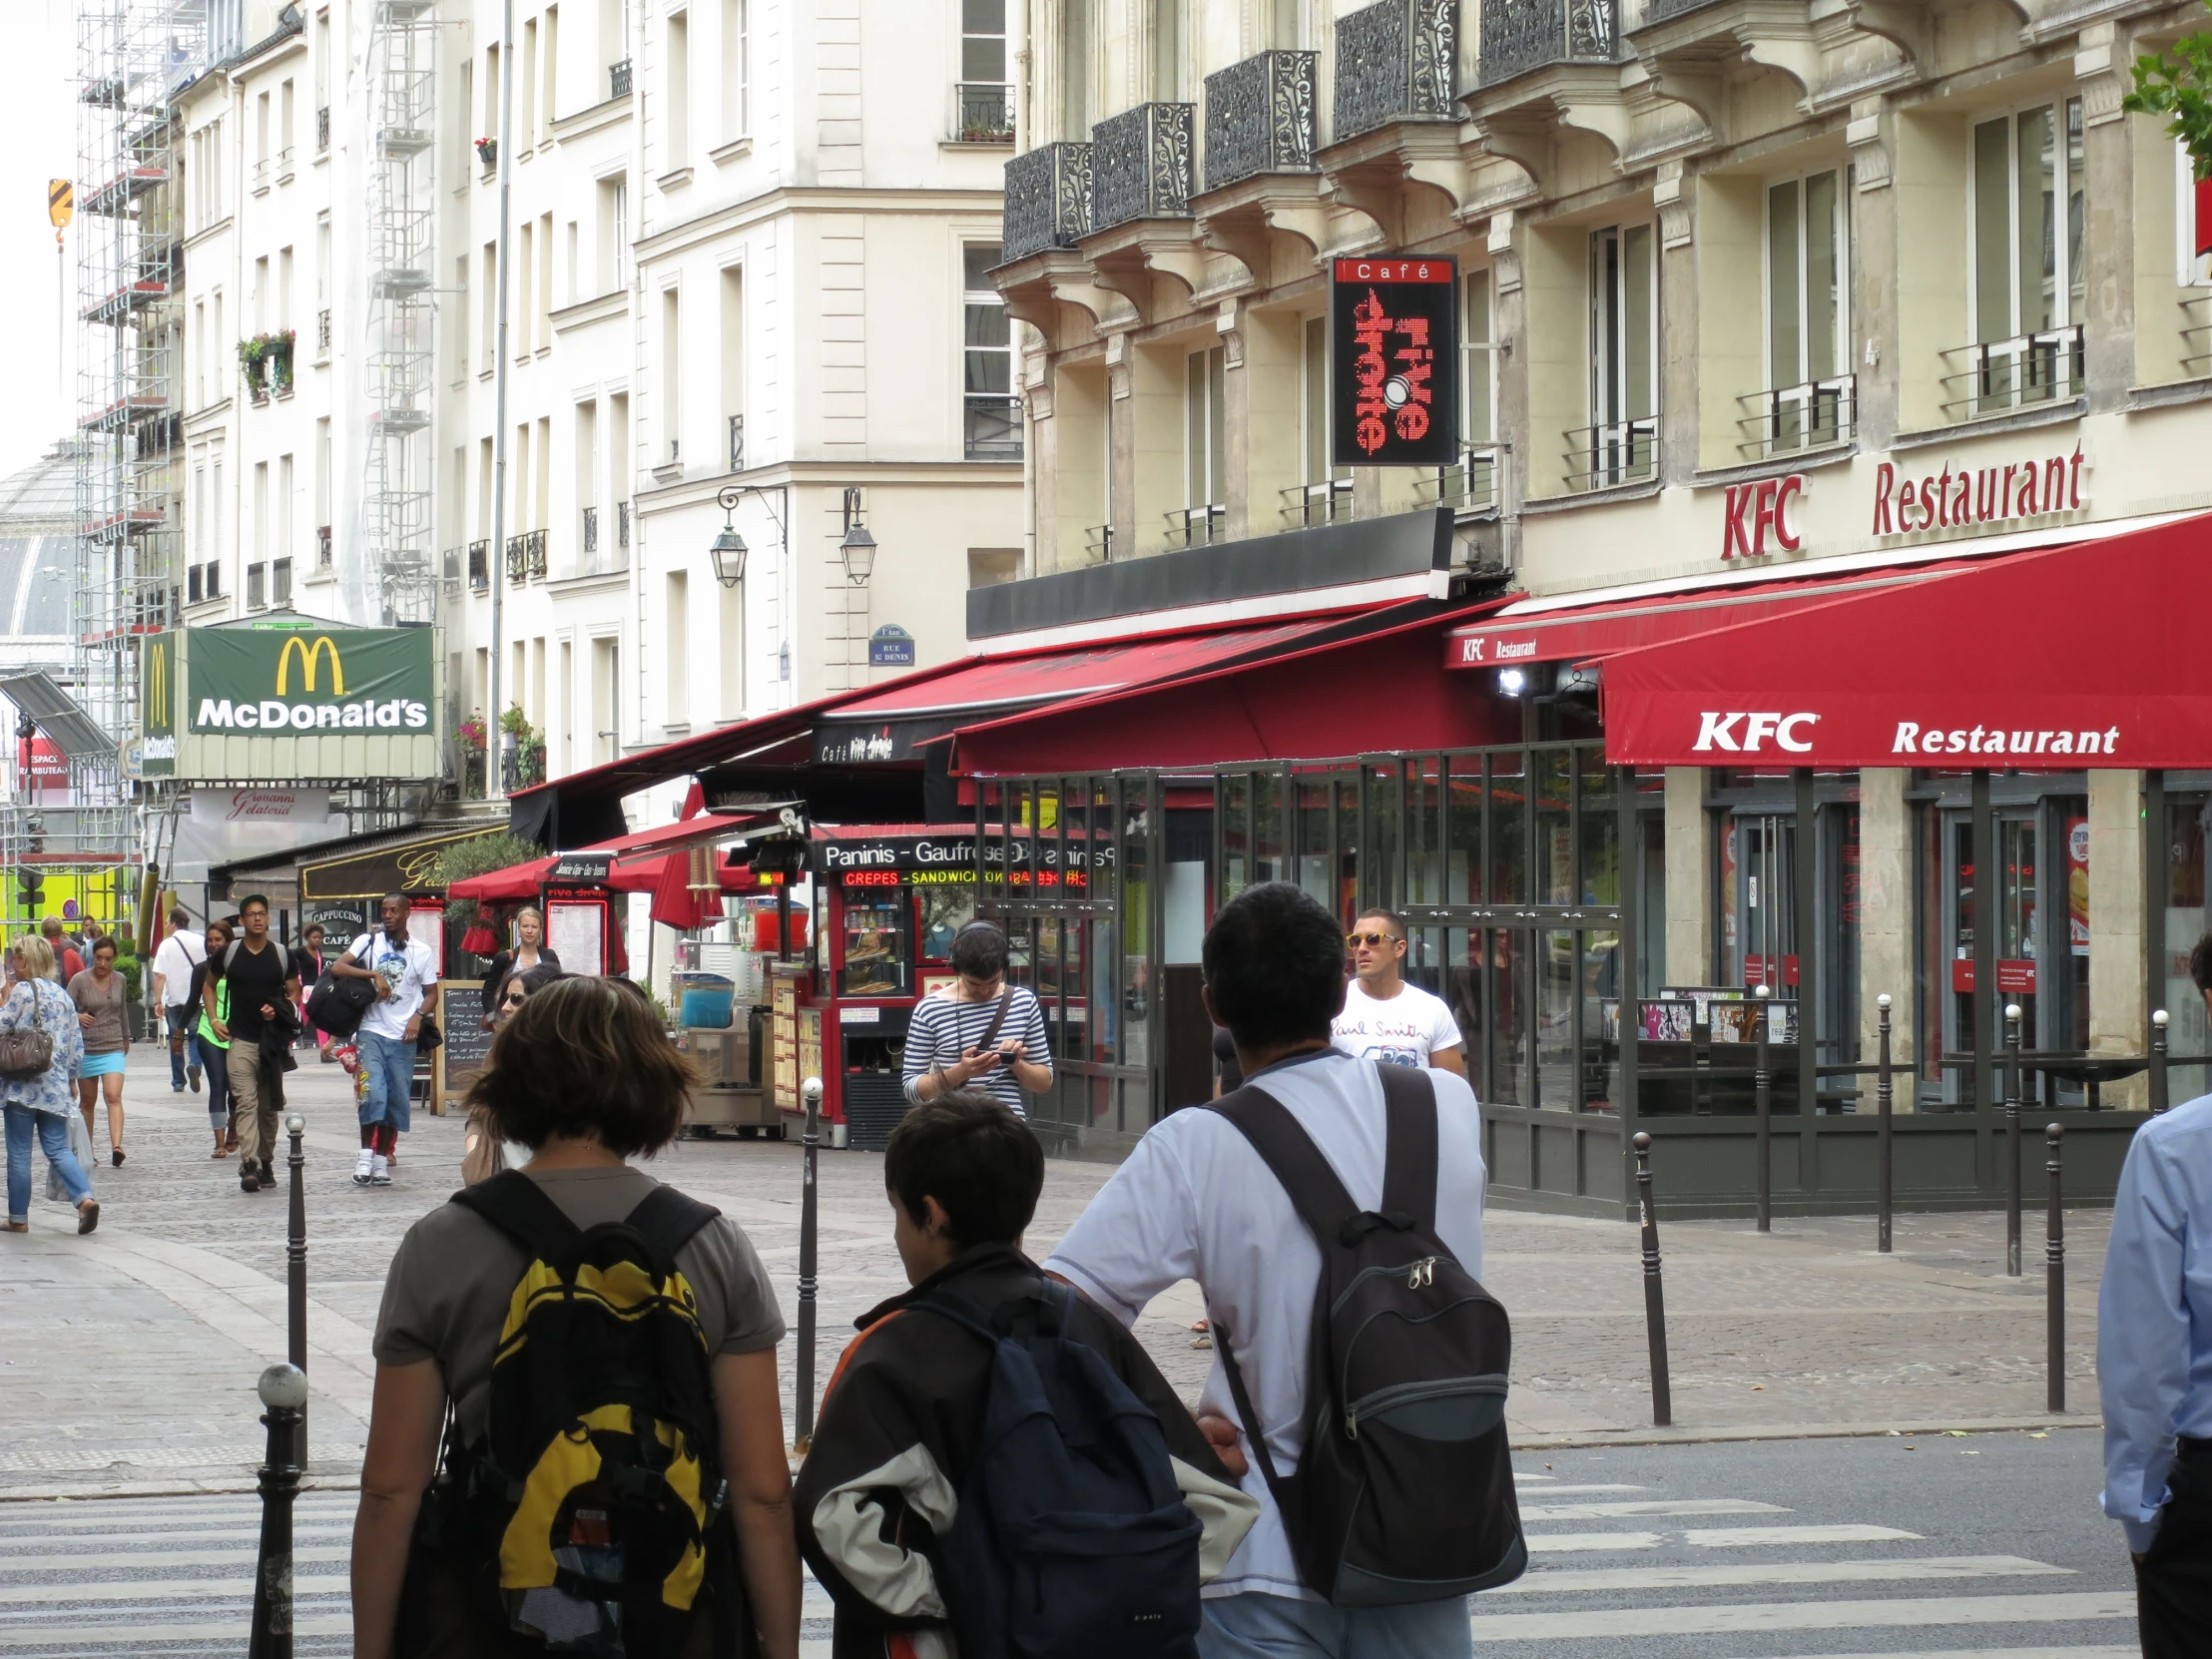 pedestrians walk through a downtown sidewalk that is lined with restaurants